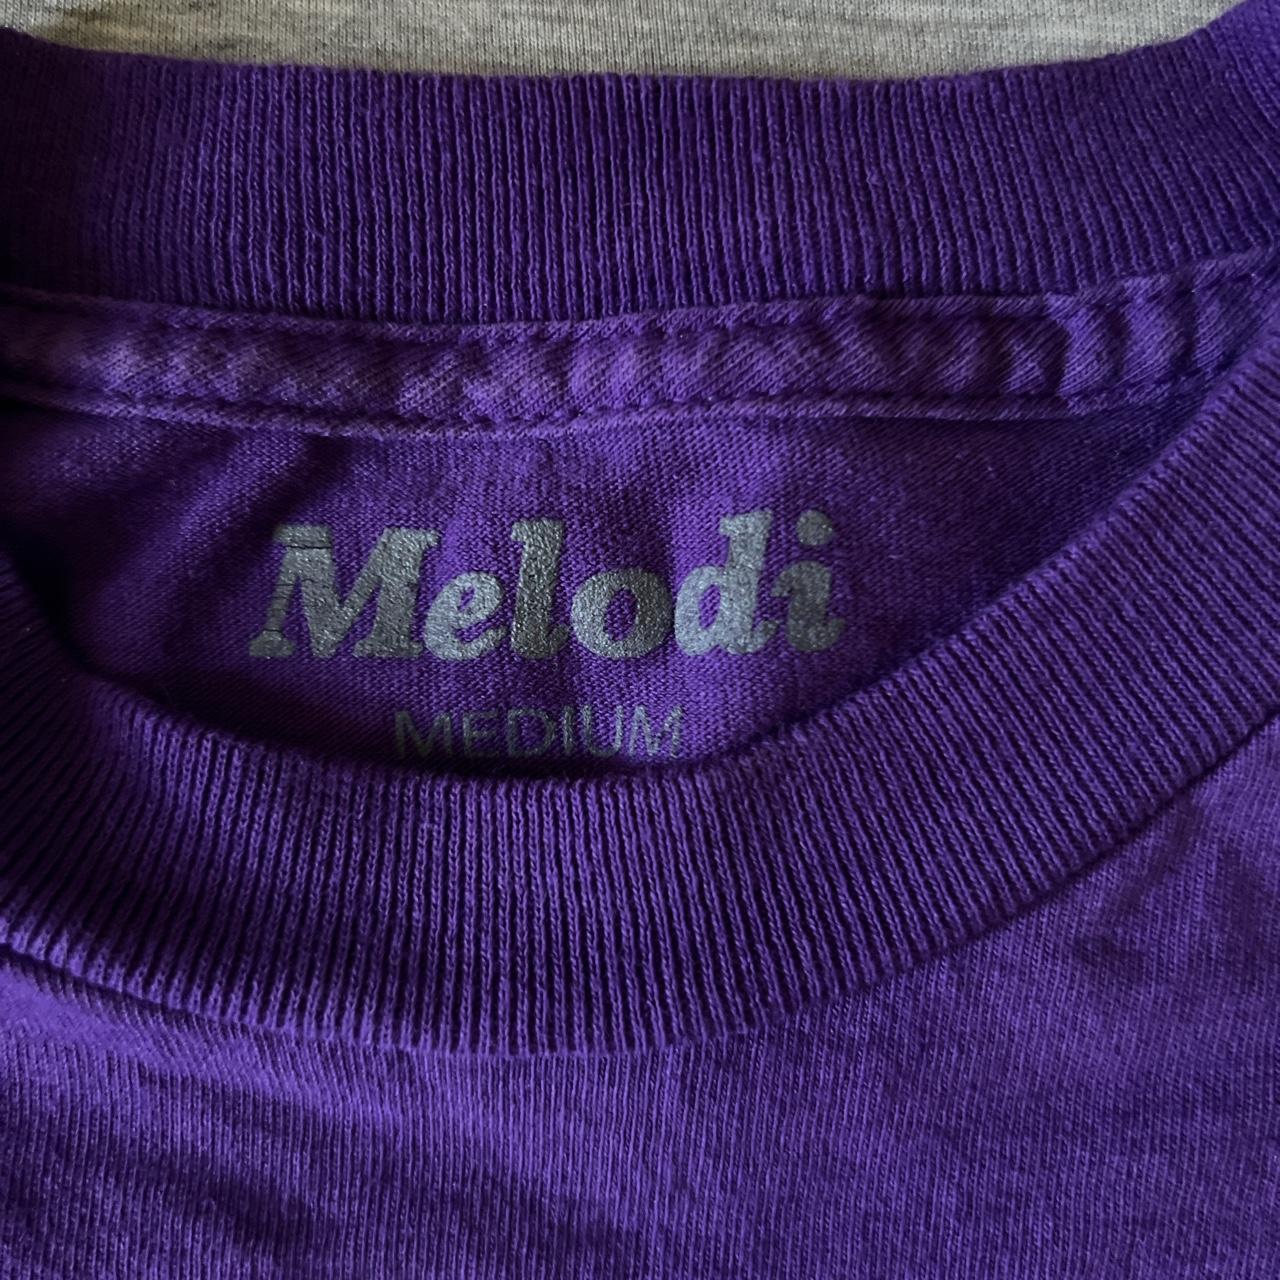 EC Melodi purple tee size medium #melodi #ecmelodi... - Depop